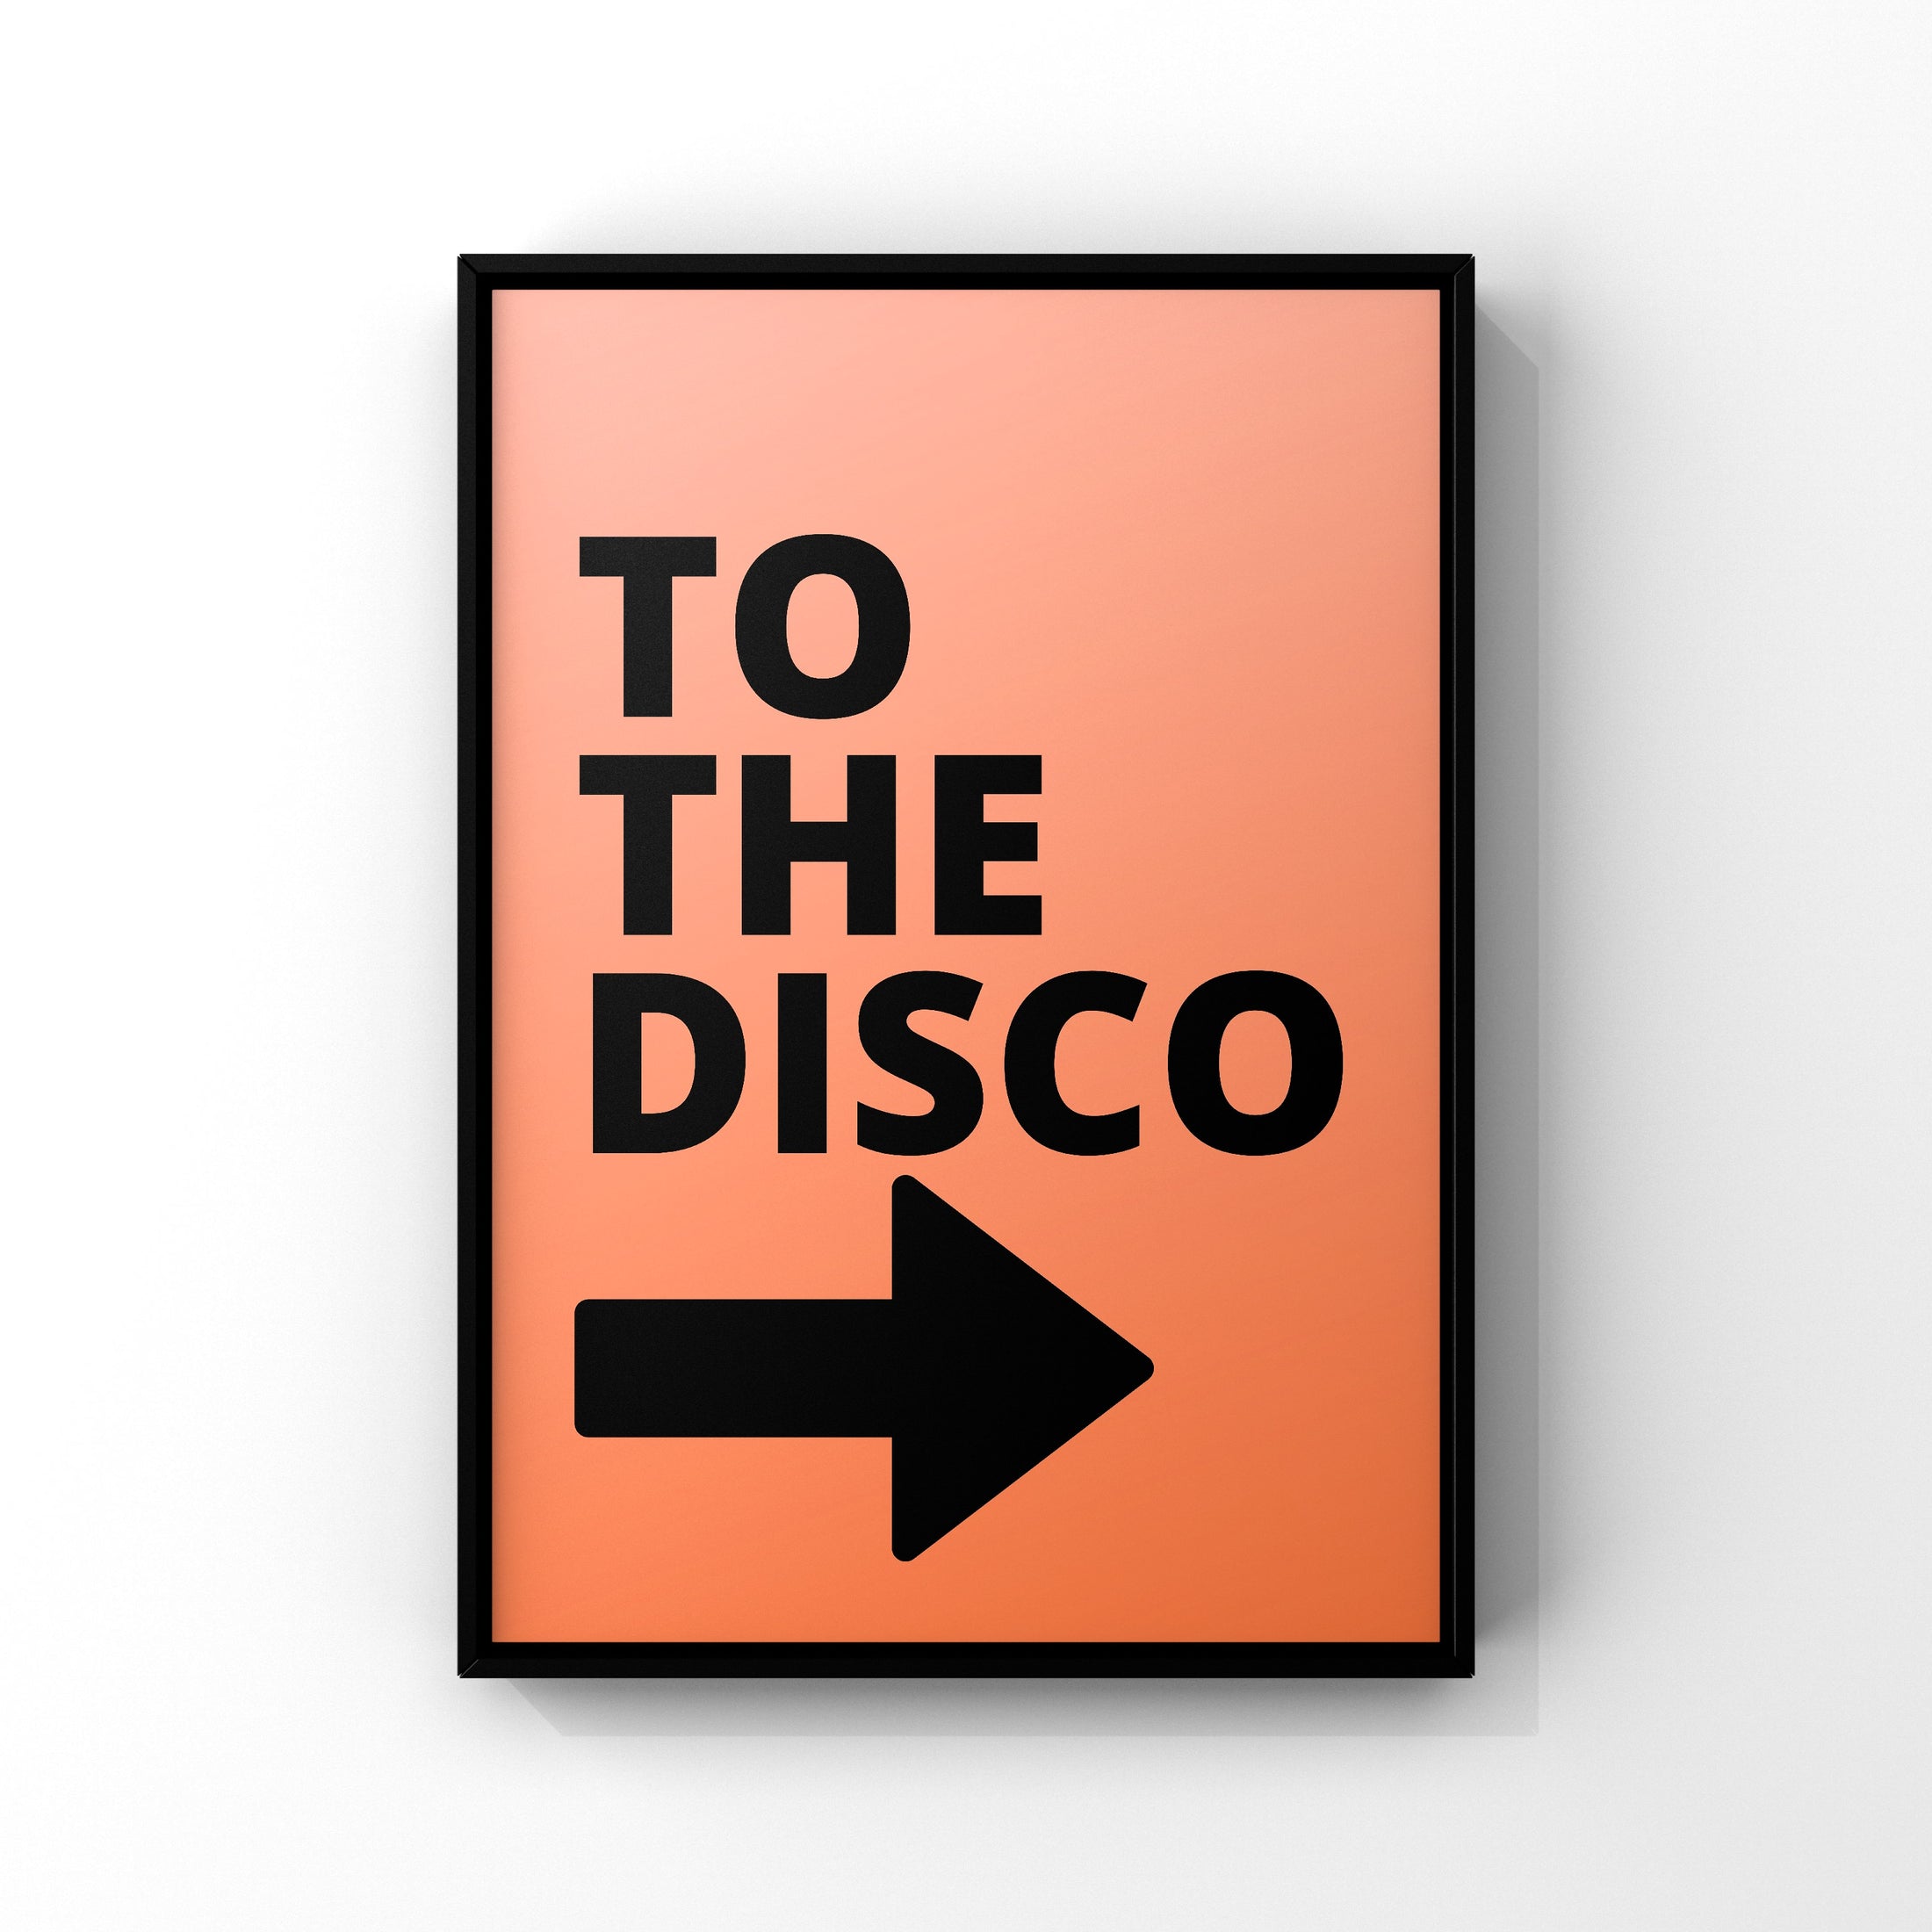 To the disco